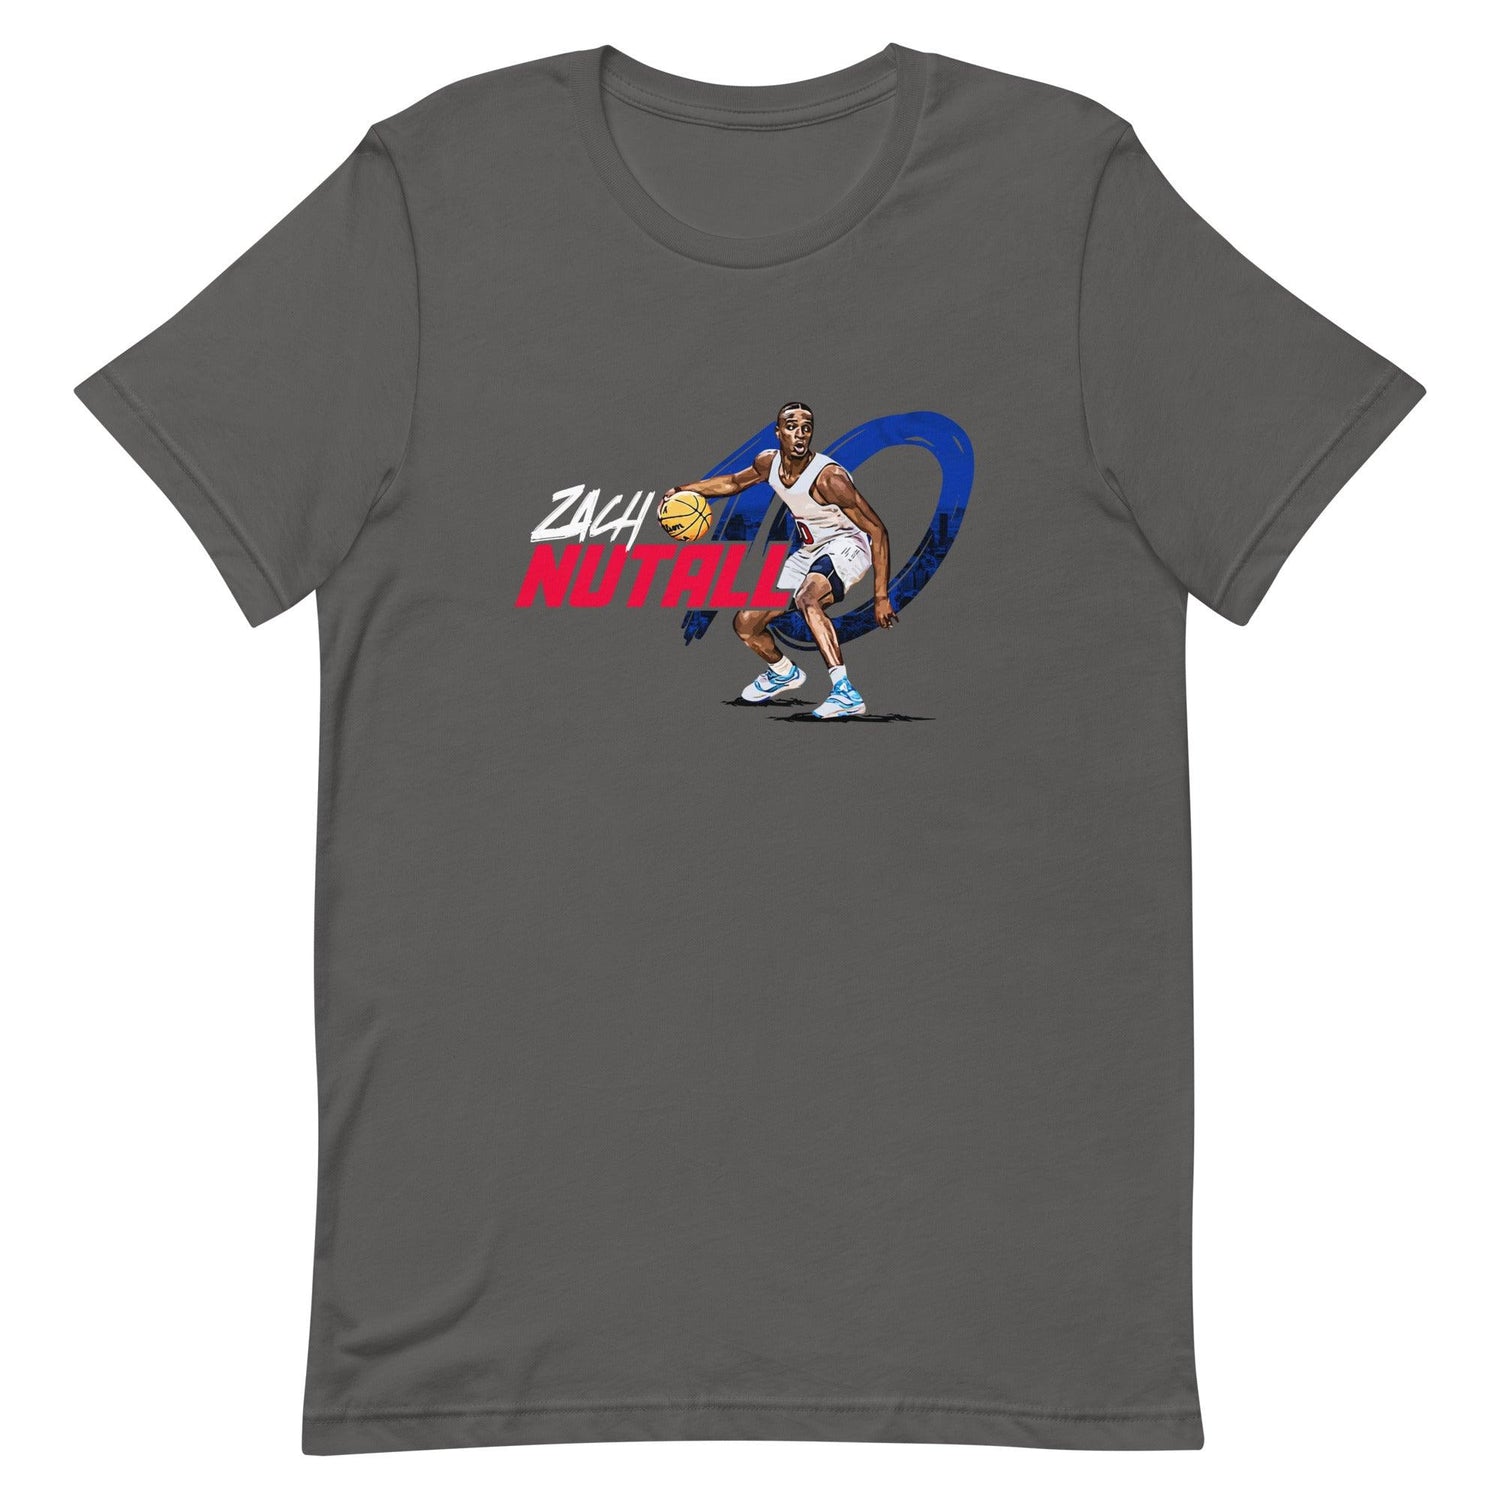 Zach Nutall "Gameday" t-shirt - Fan Arch